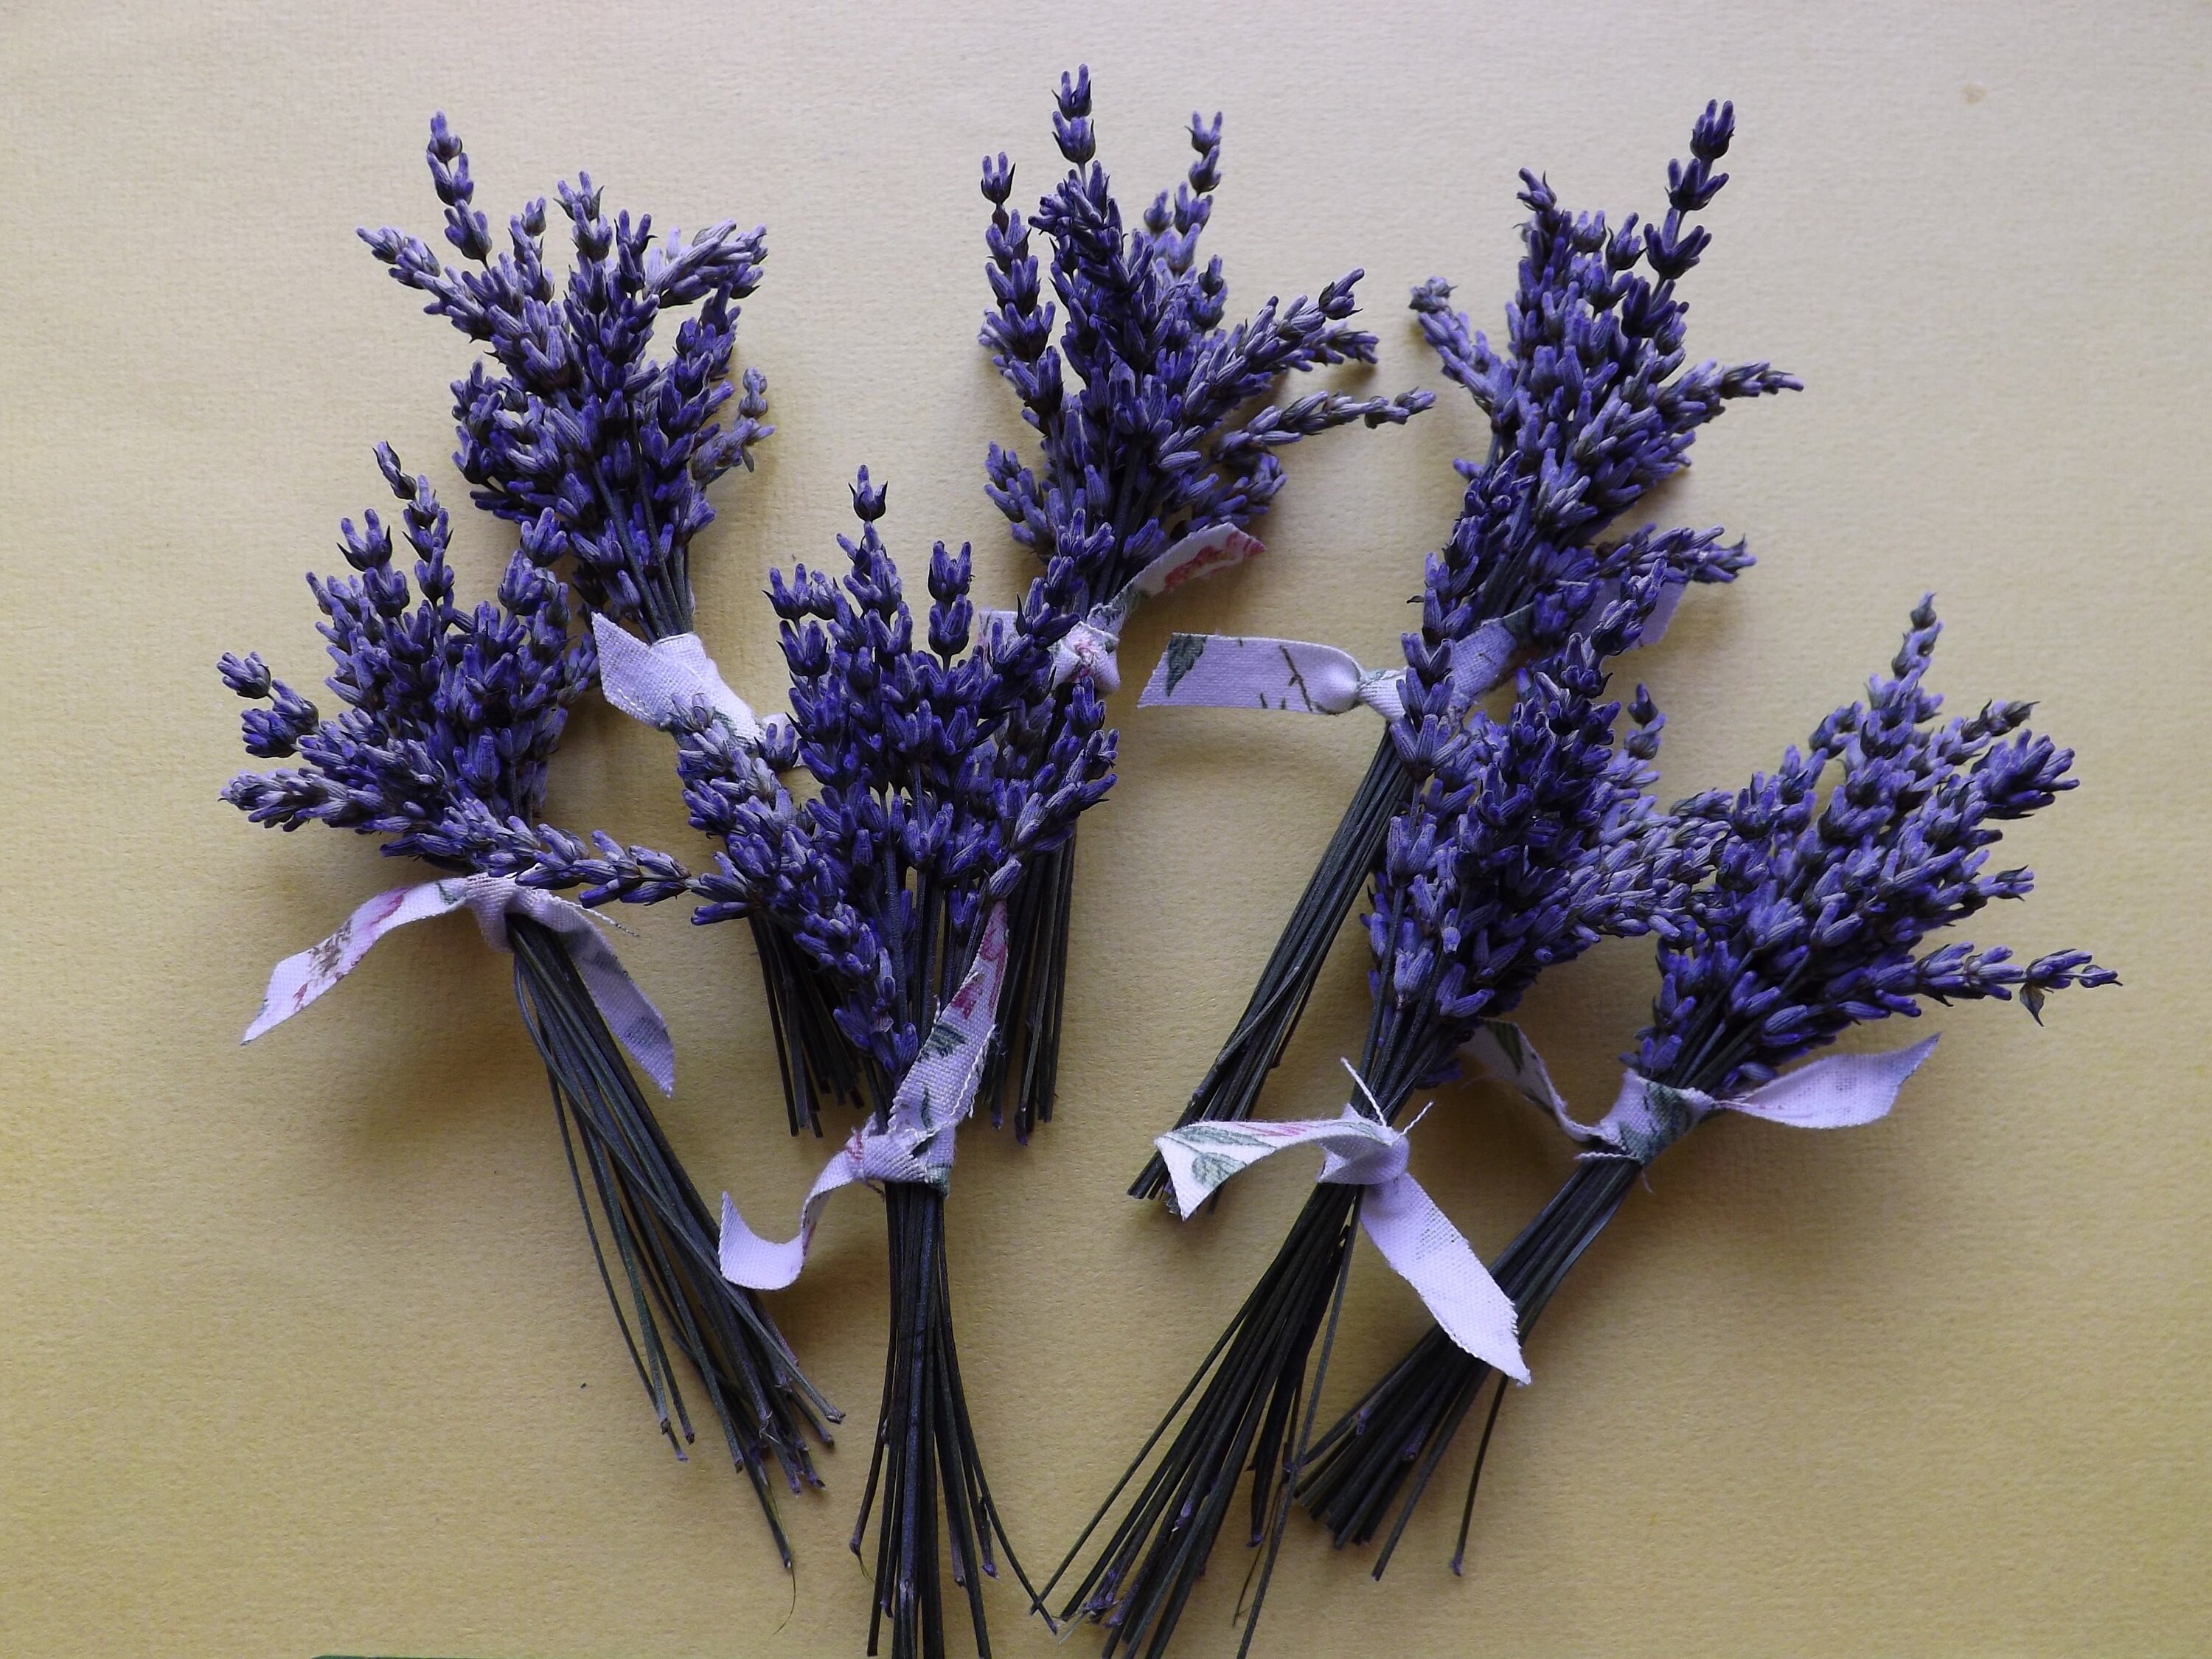  Dried Lavender Flower Buds for Crafts, Baking, Tea